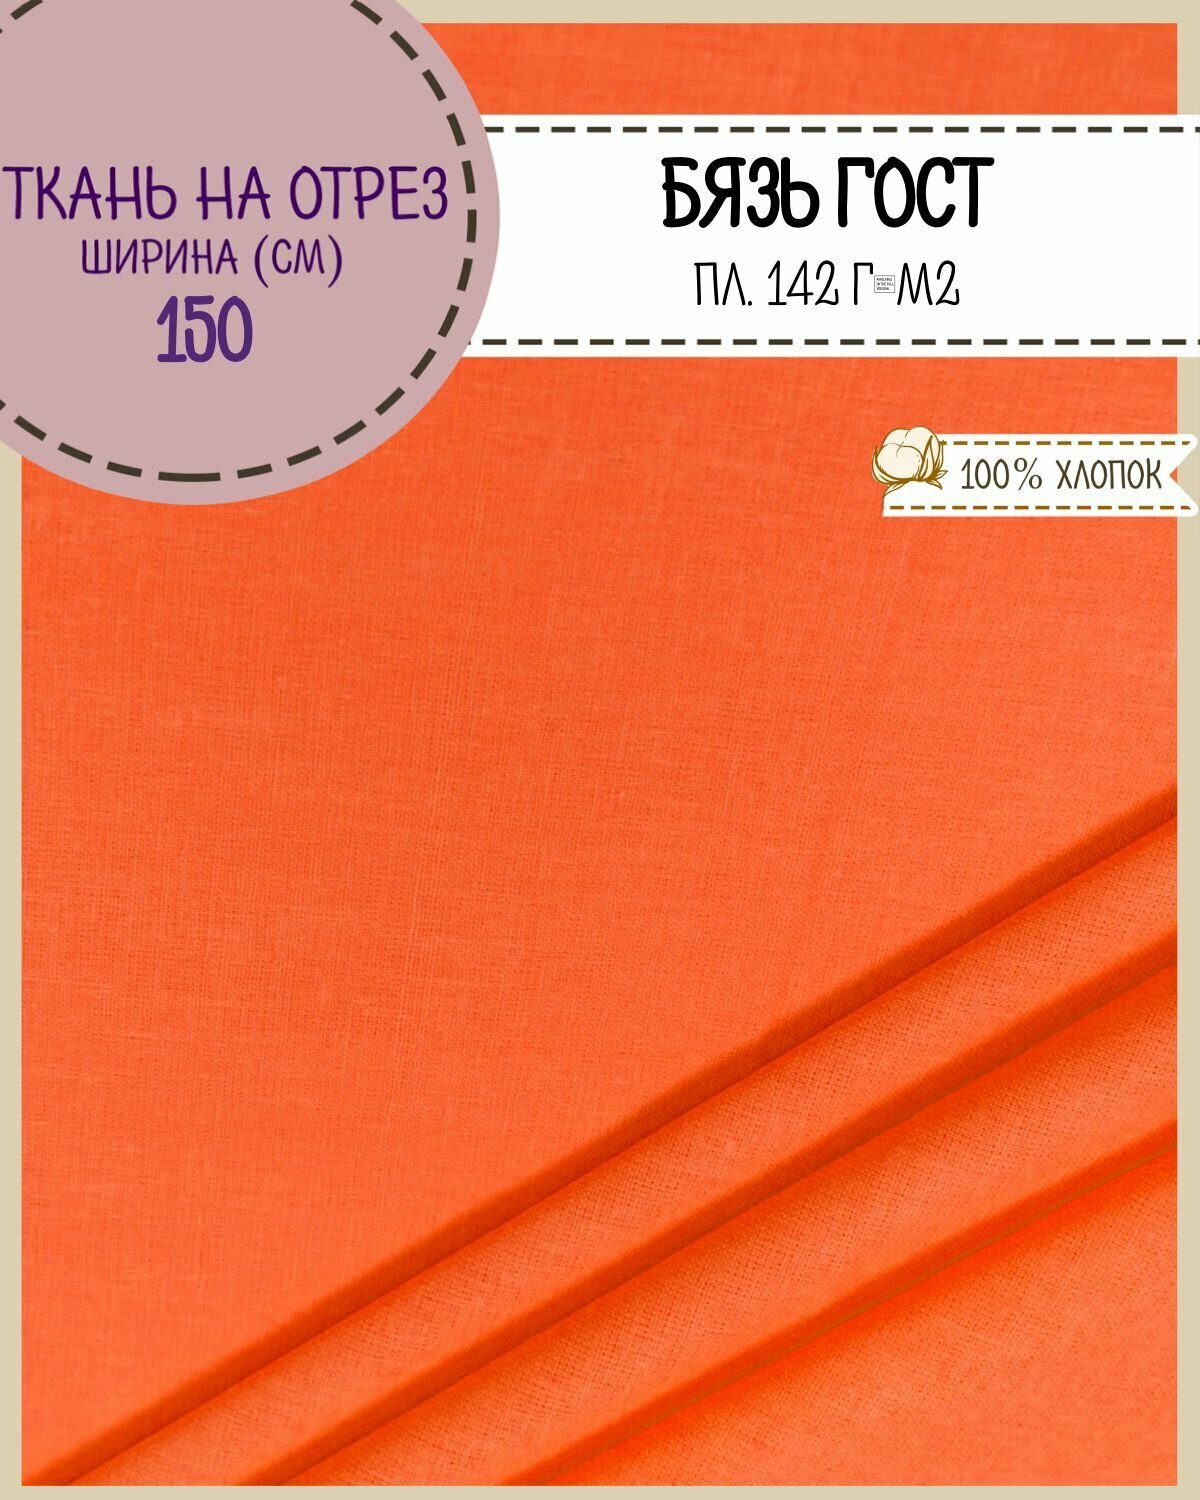 Ткань Бязь ГОСТ однотонная цв. оранжевый 100% хлопок пл. 140 г/м2 ш-150 см на отрез цена за пог. метр